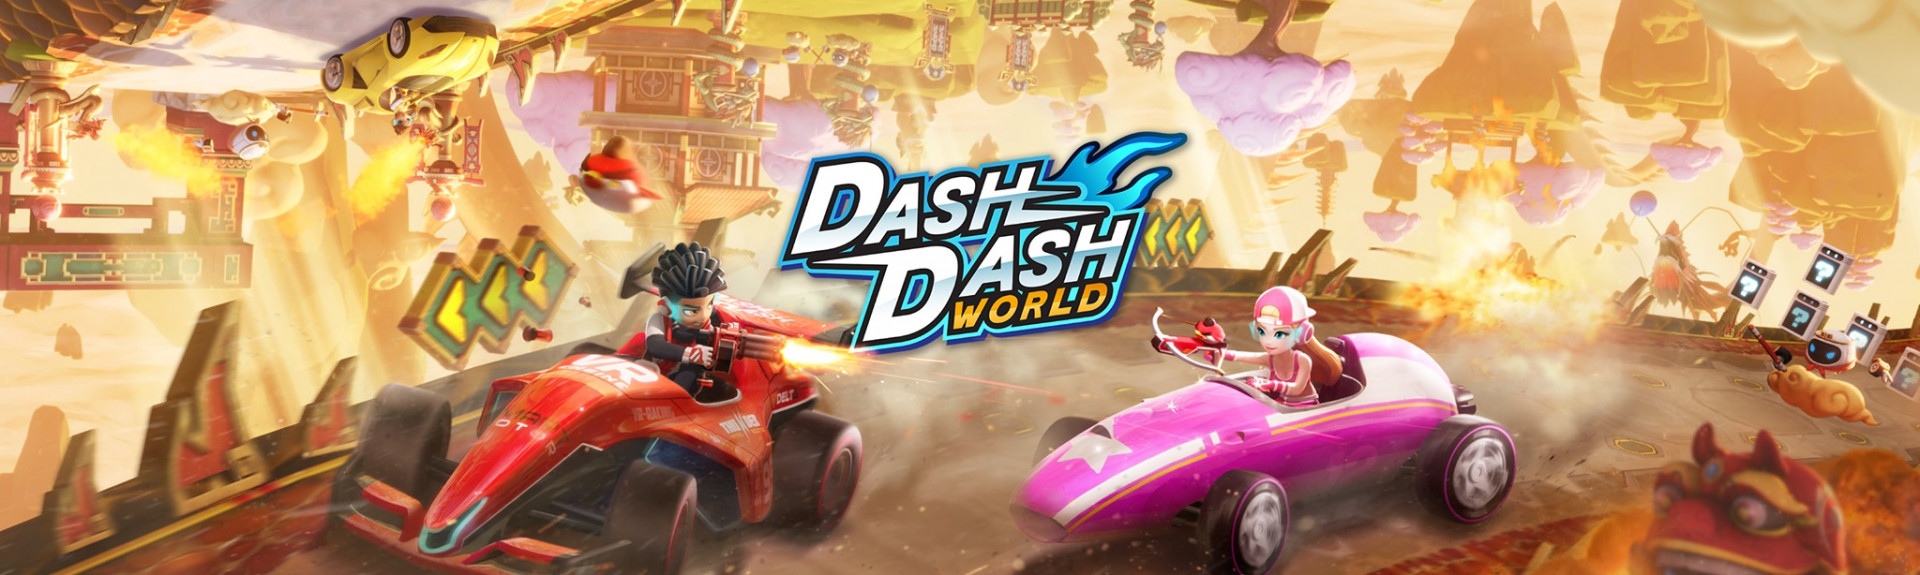 Dash Dash World